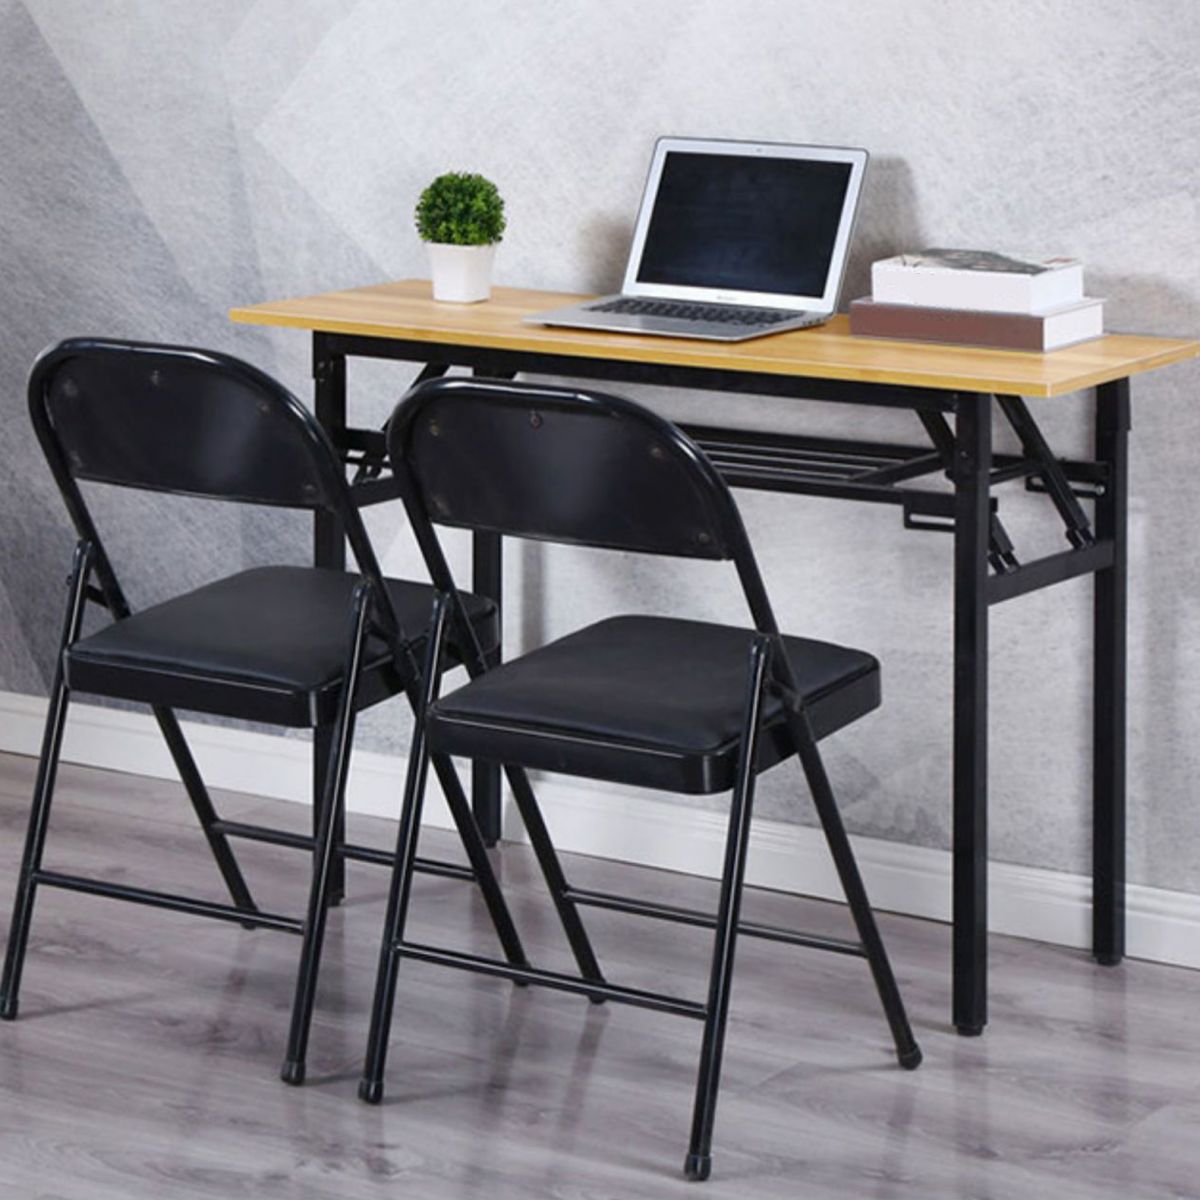 Foldable Writing Desk Contemporary Style Rectangular Dormitory Bedroom Desk